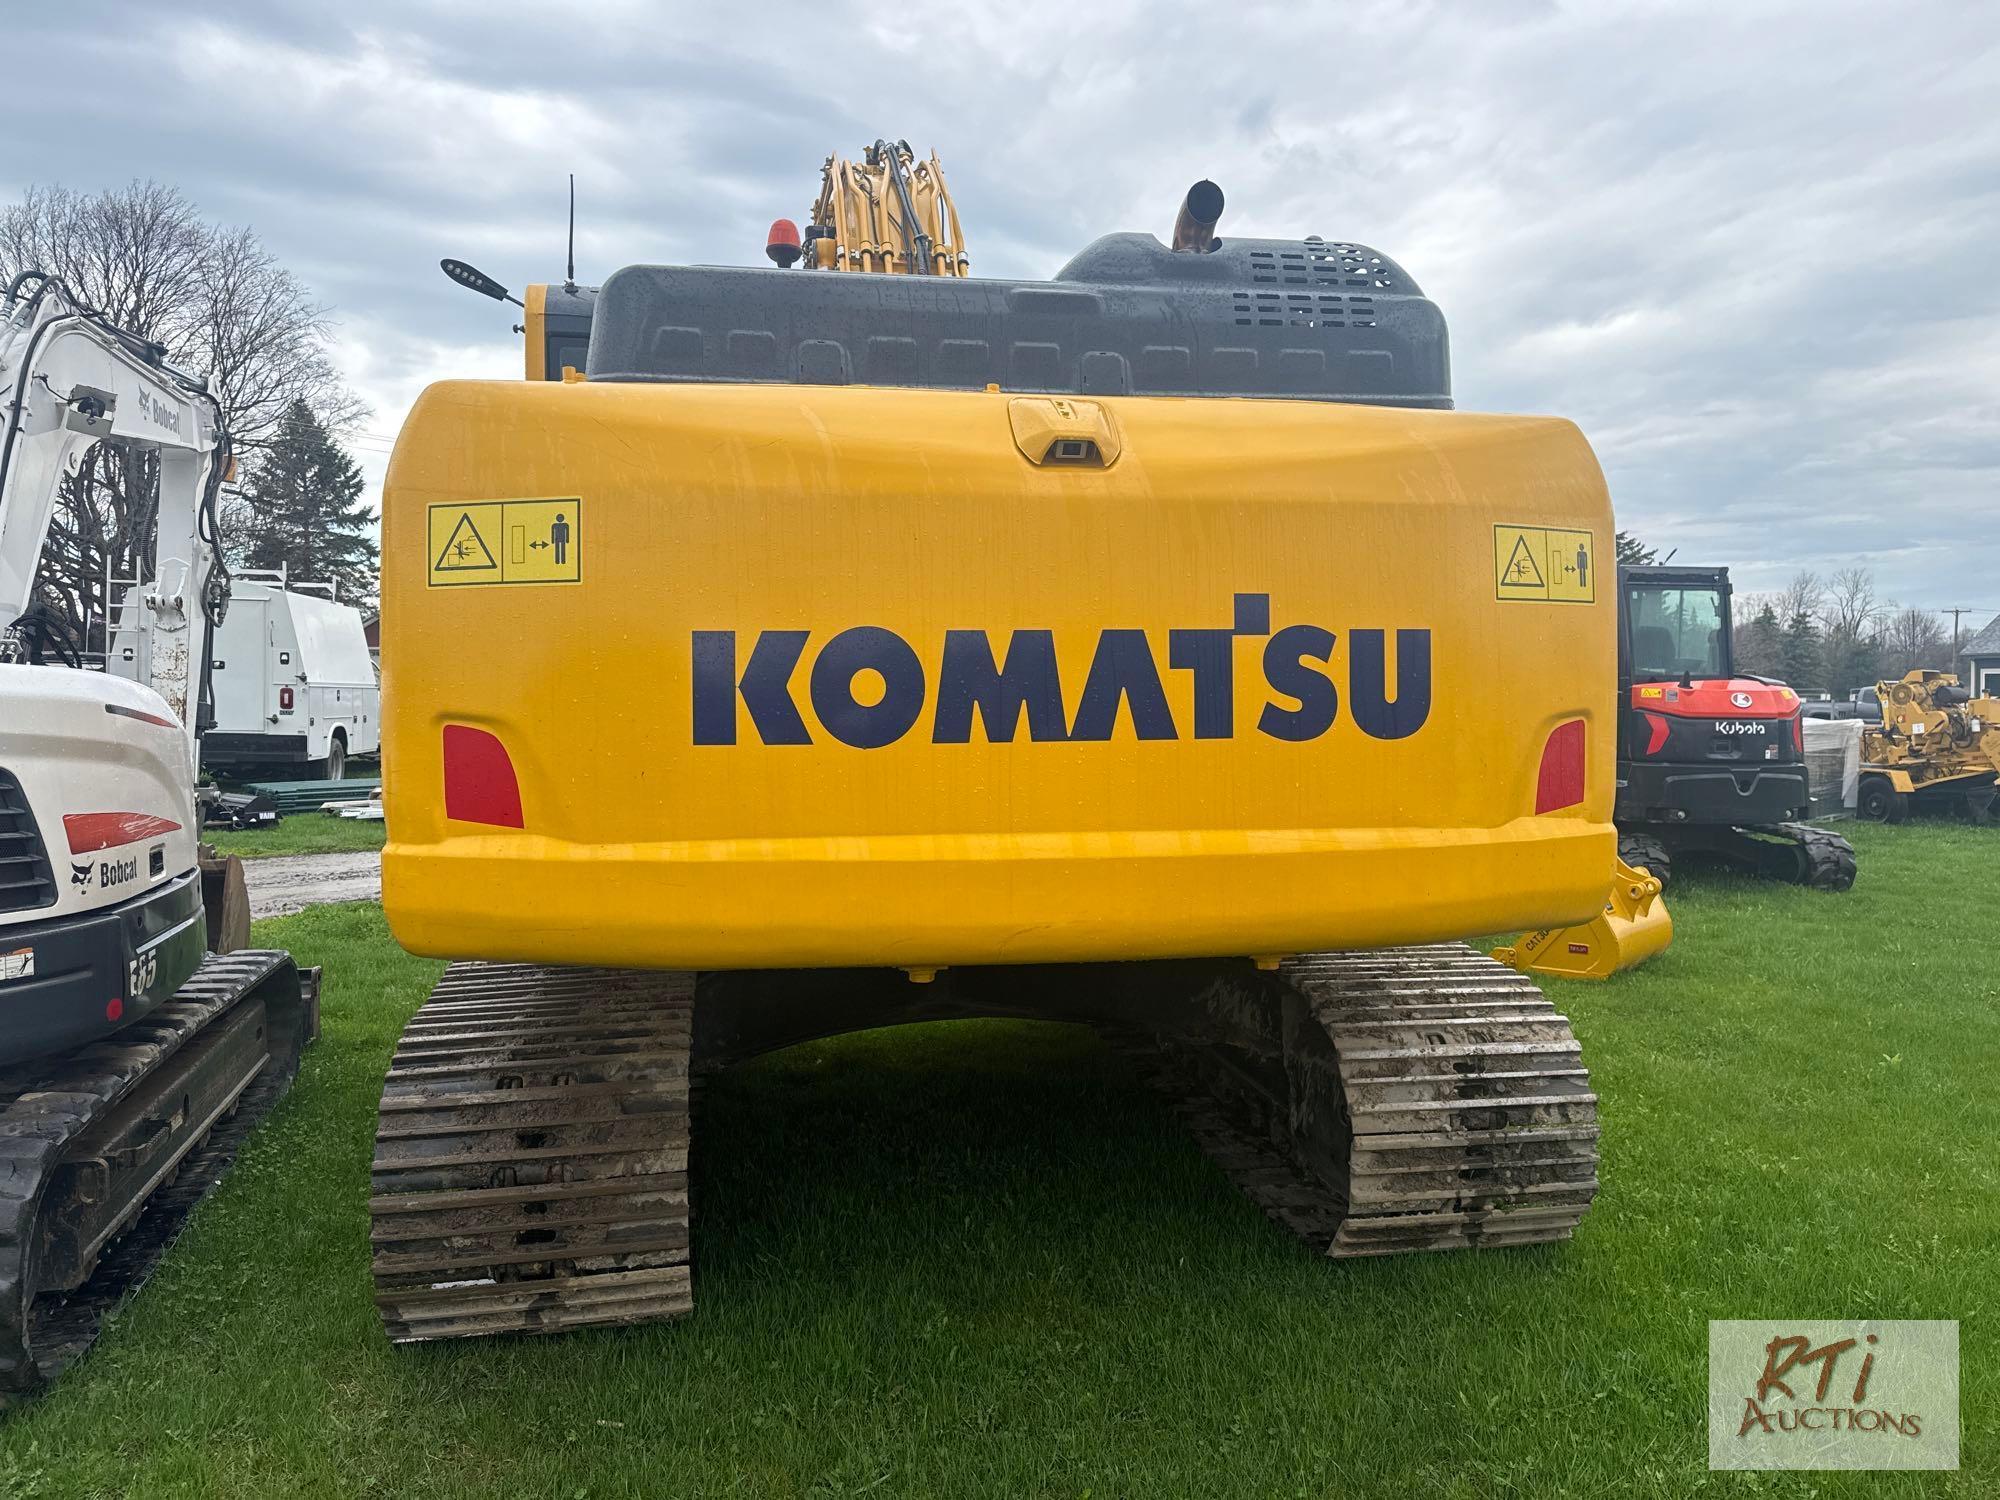 2020 Komatsu PC210LC-11 excavator, cab, hydraulic thumb, auxiliary hydraulics, hydraulic coupler,